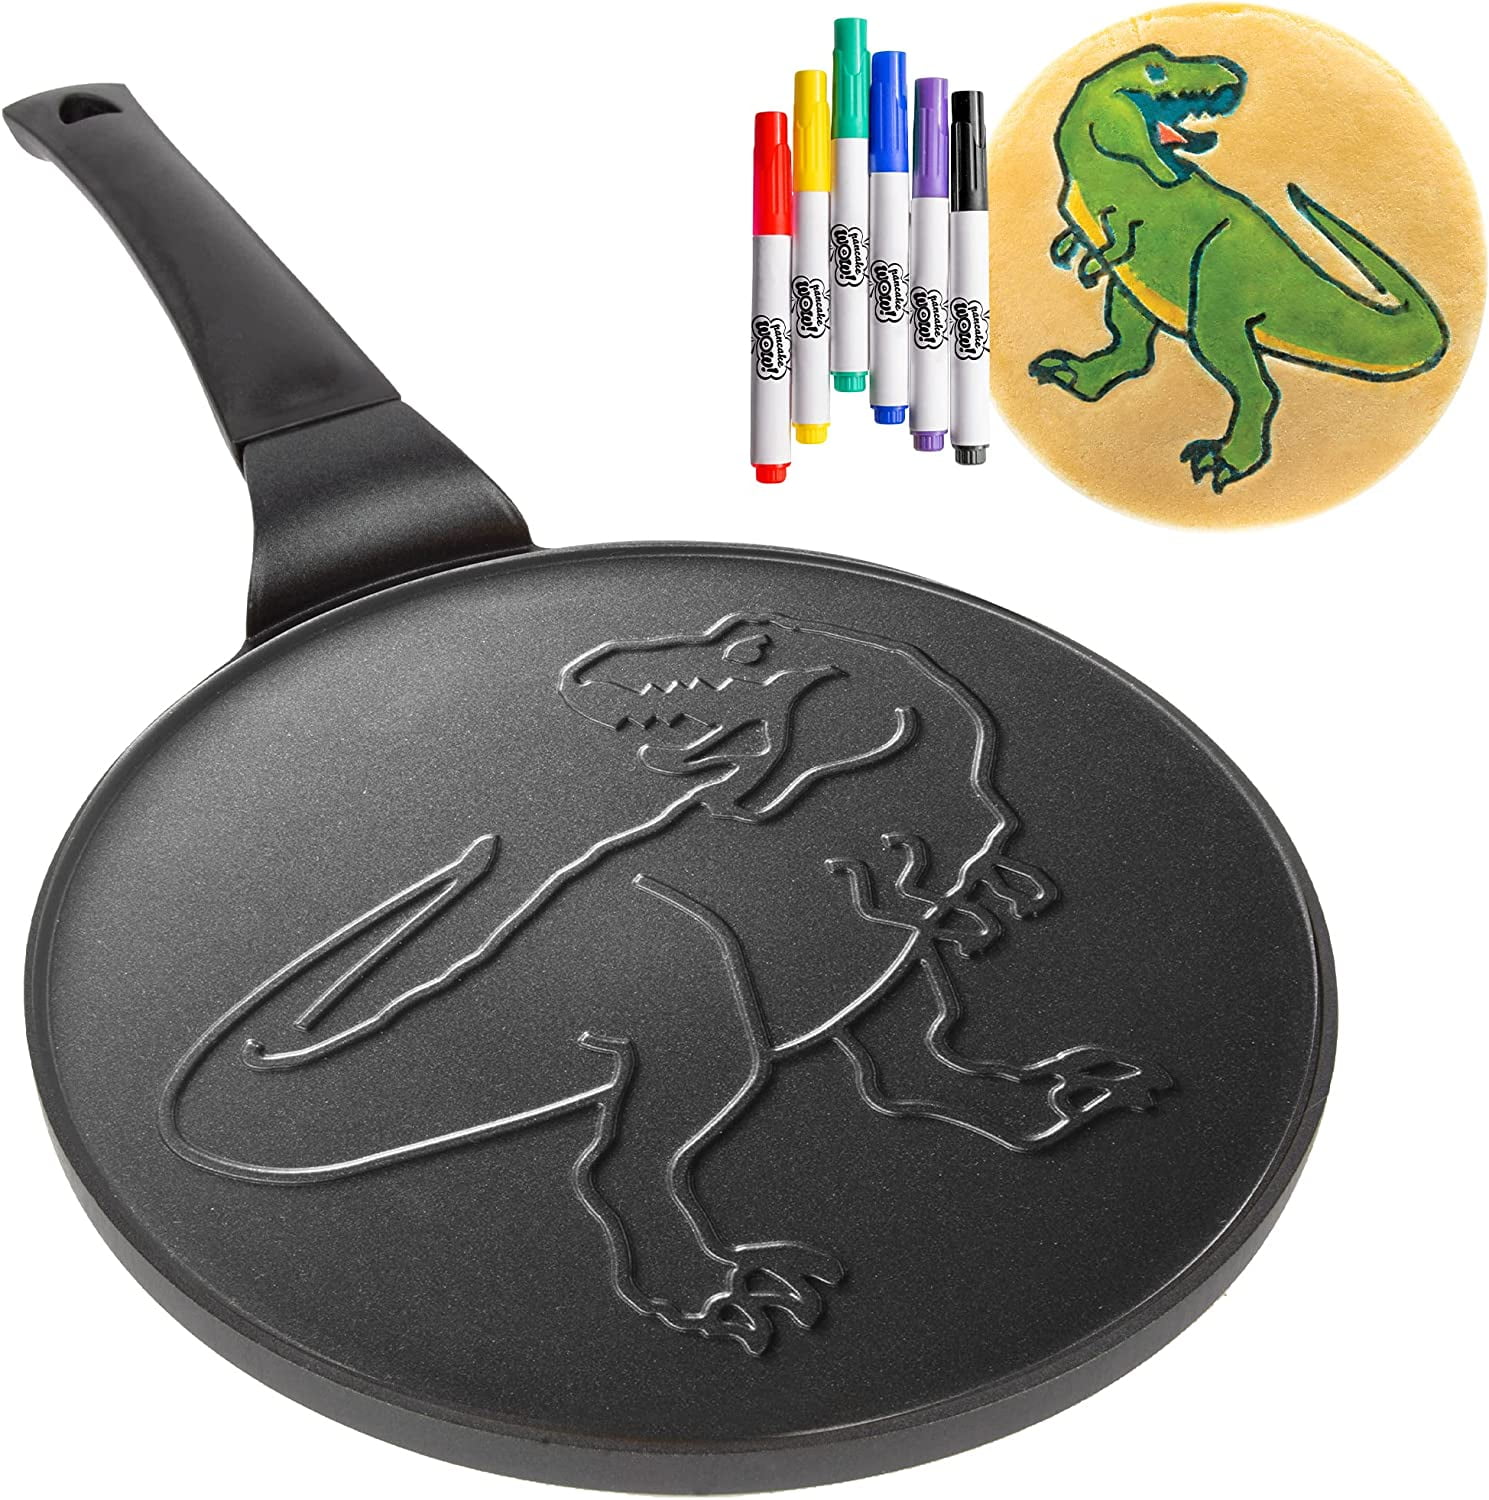 Dinosaur and Unicorn Pancake Art Kit by Whiskware - Be Plum Crazy!